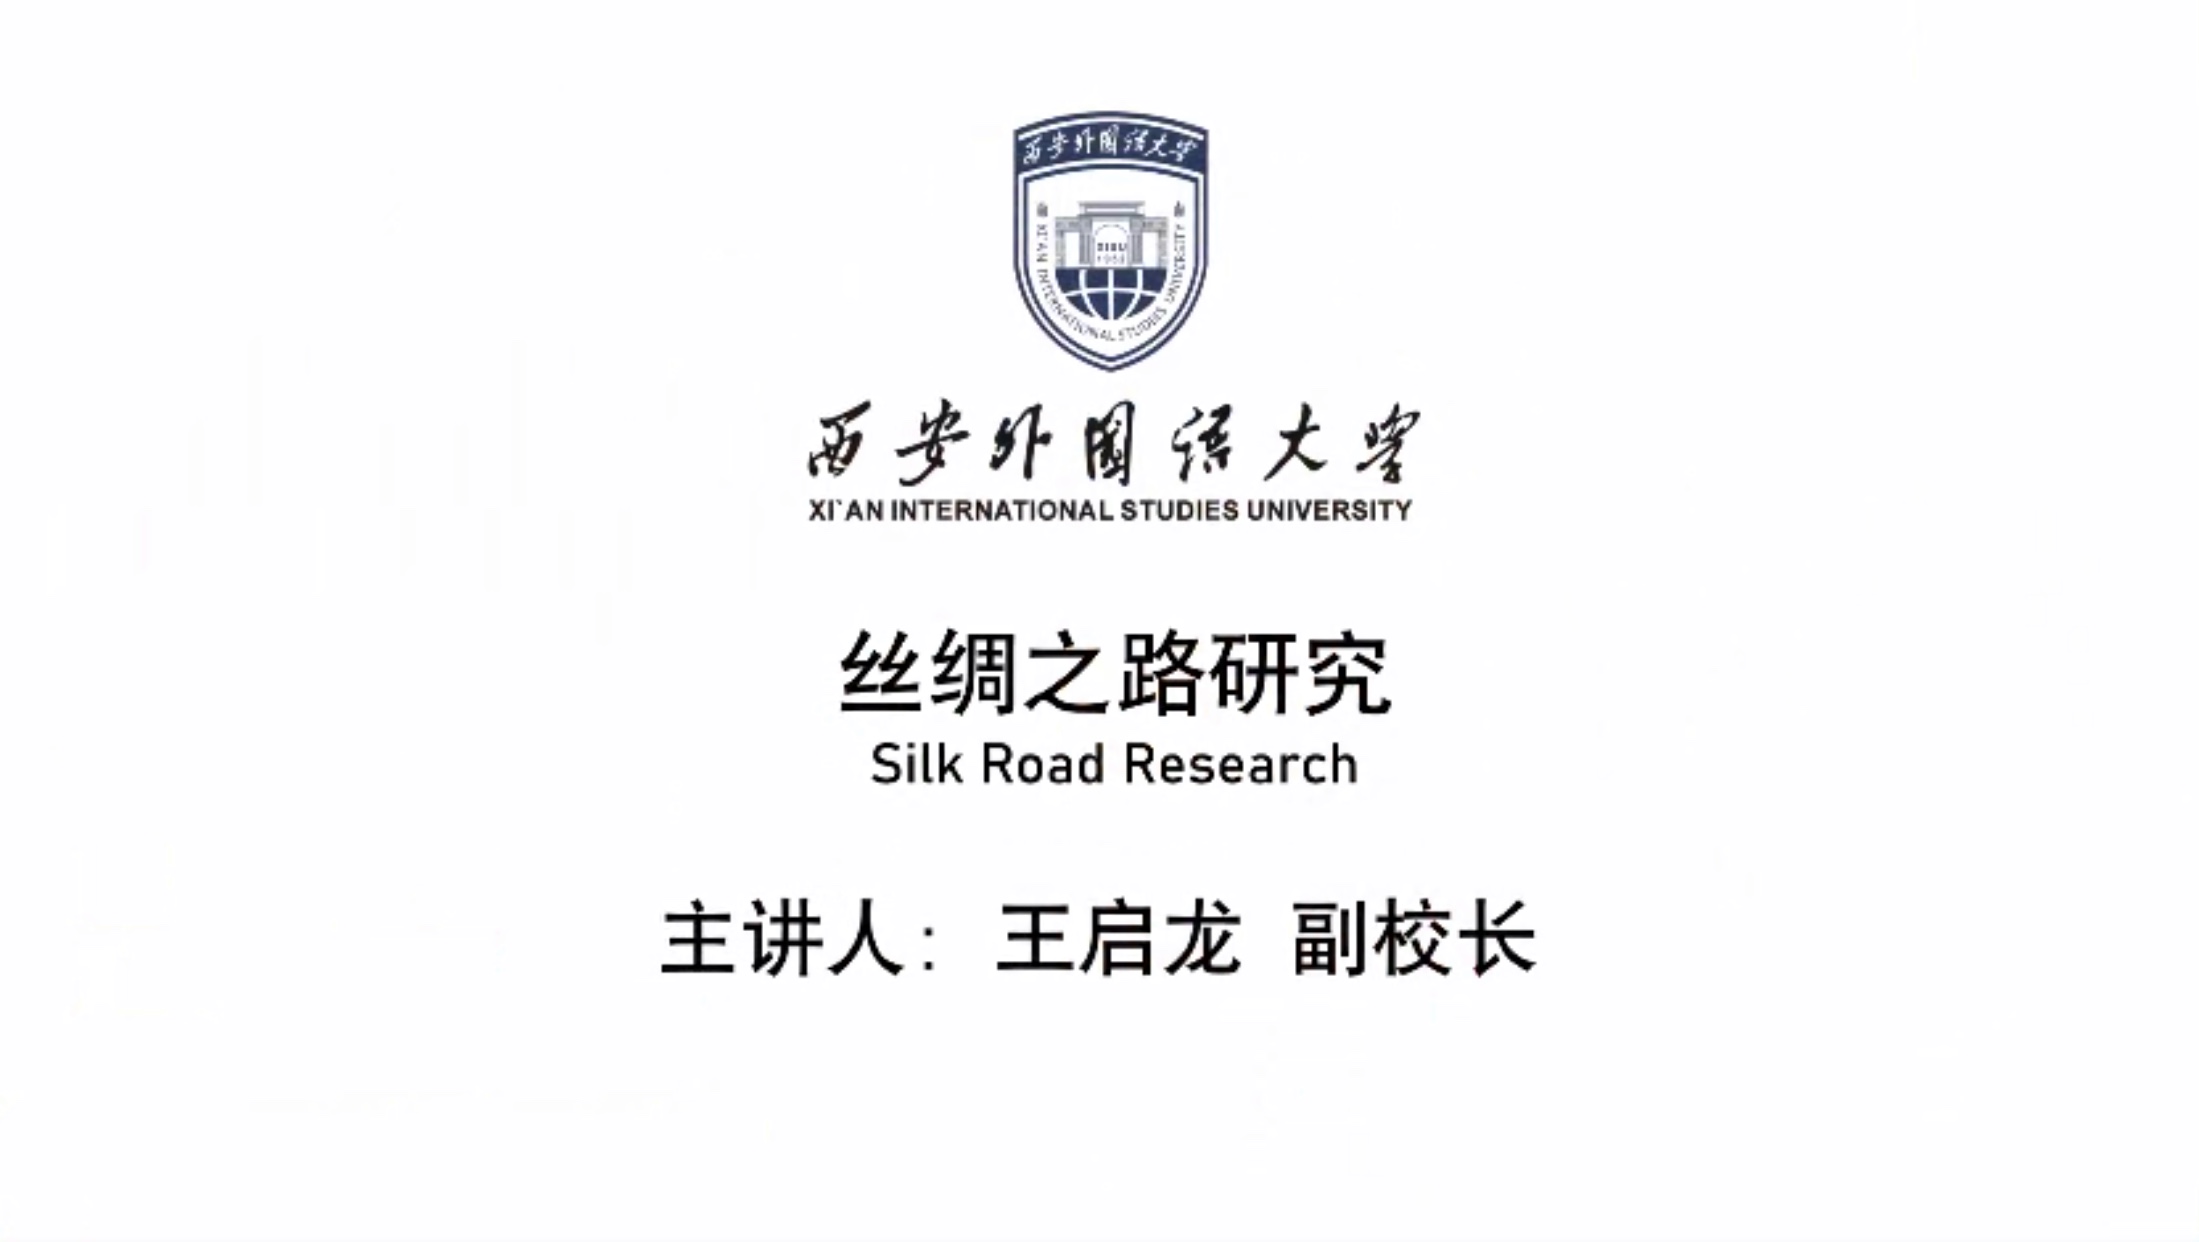 Silk Road Research